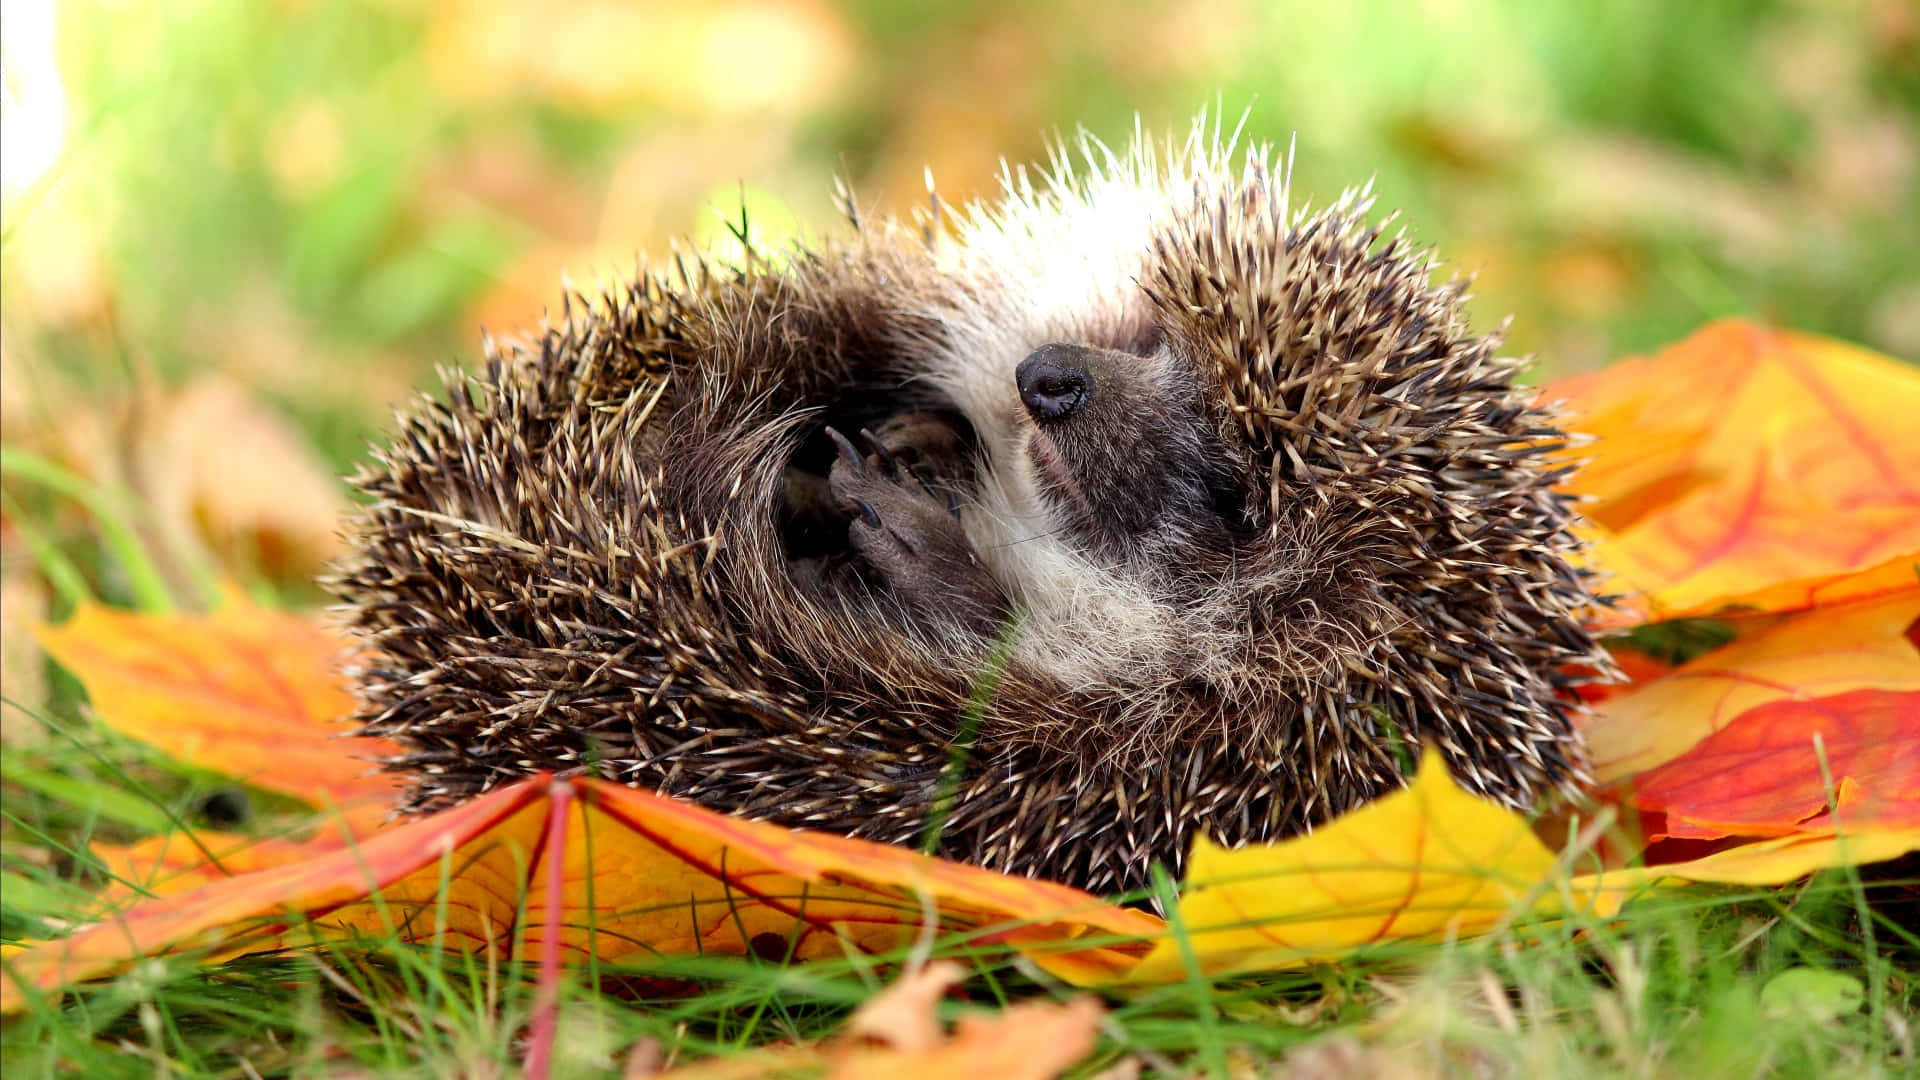 Sleeping Hedgehog Autumn Leaves Picture